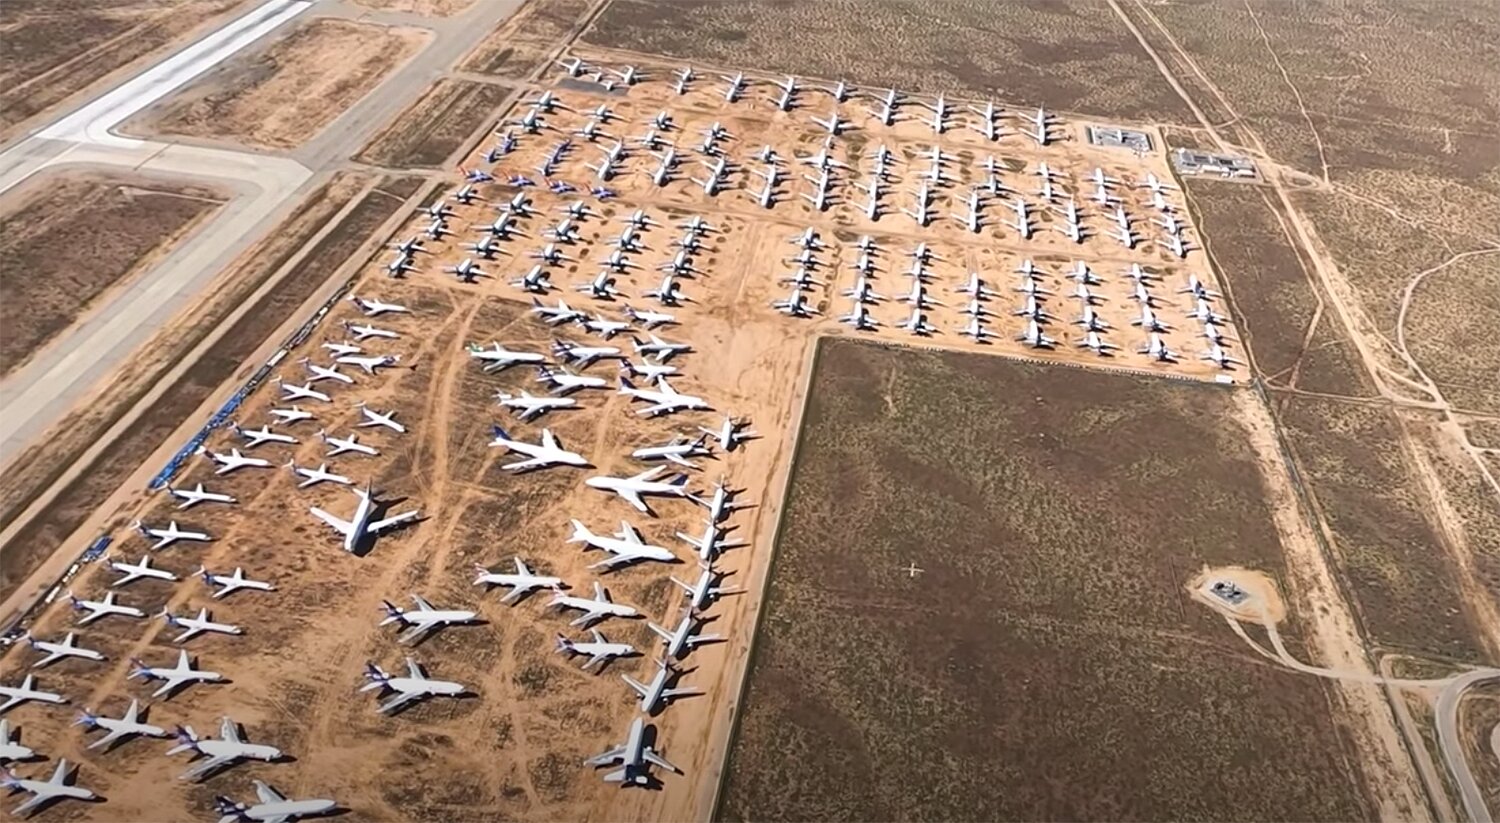 airplane parking lot